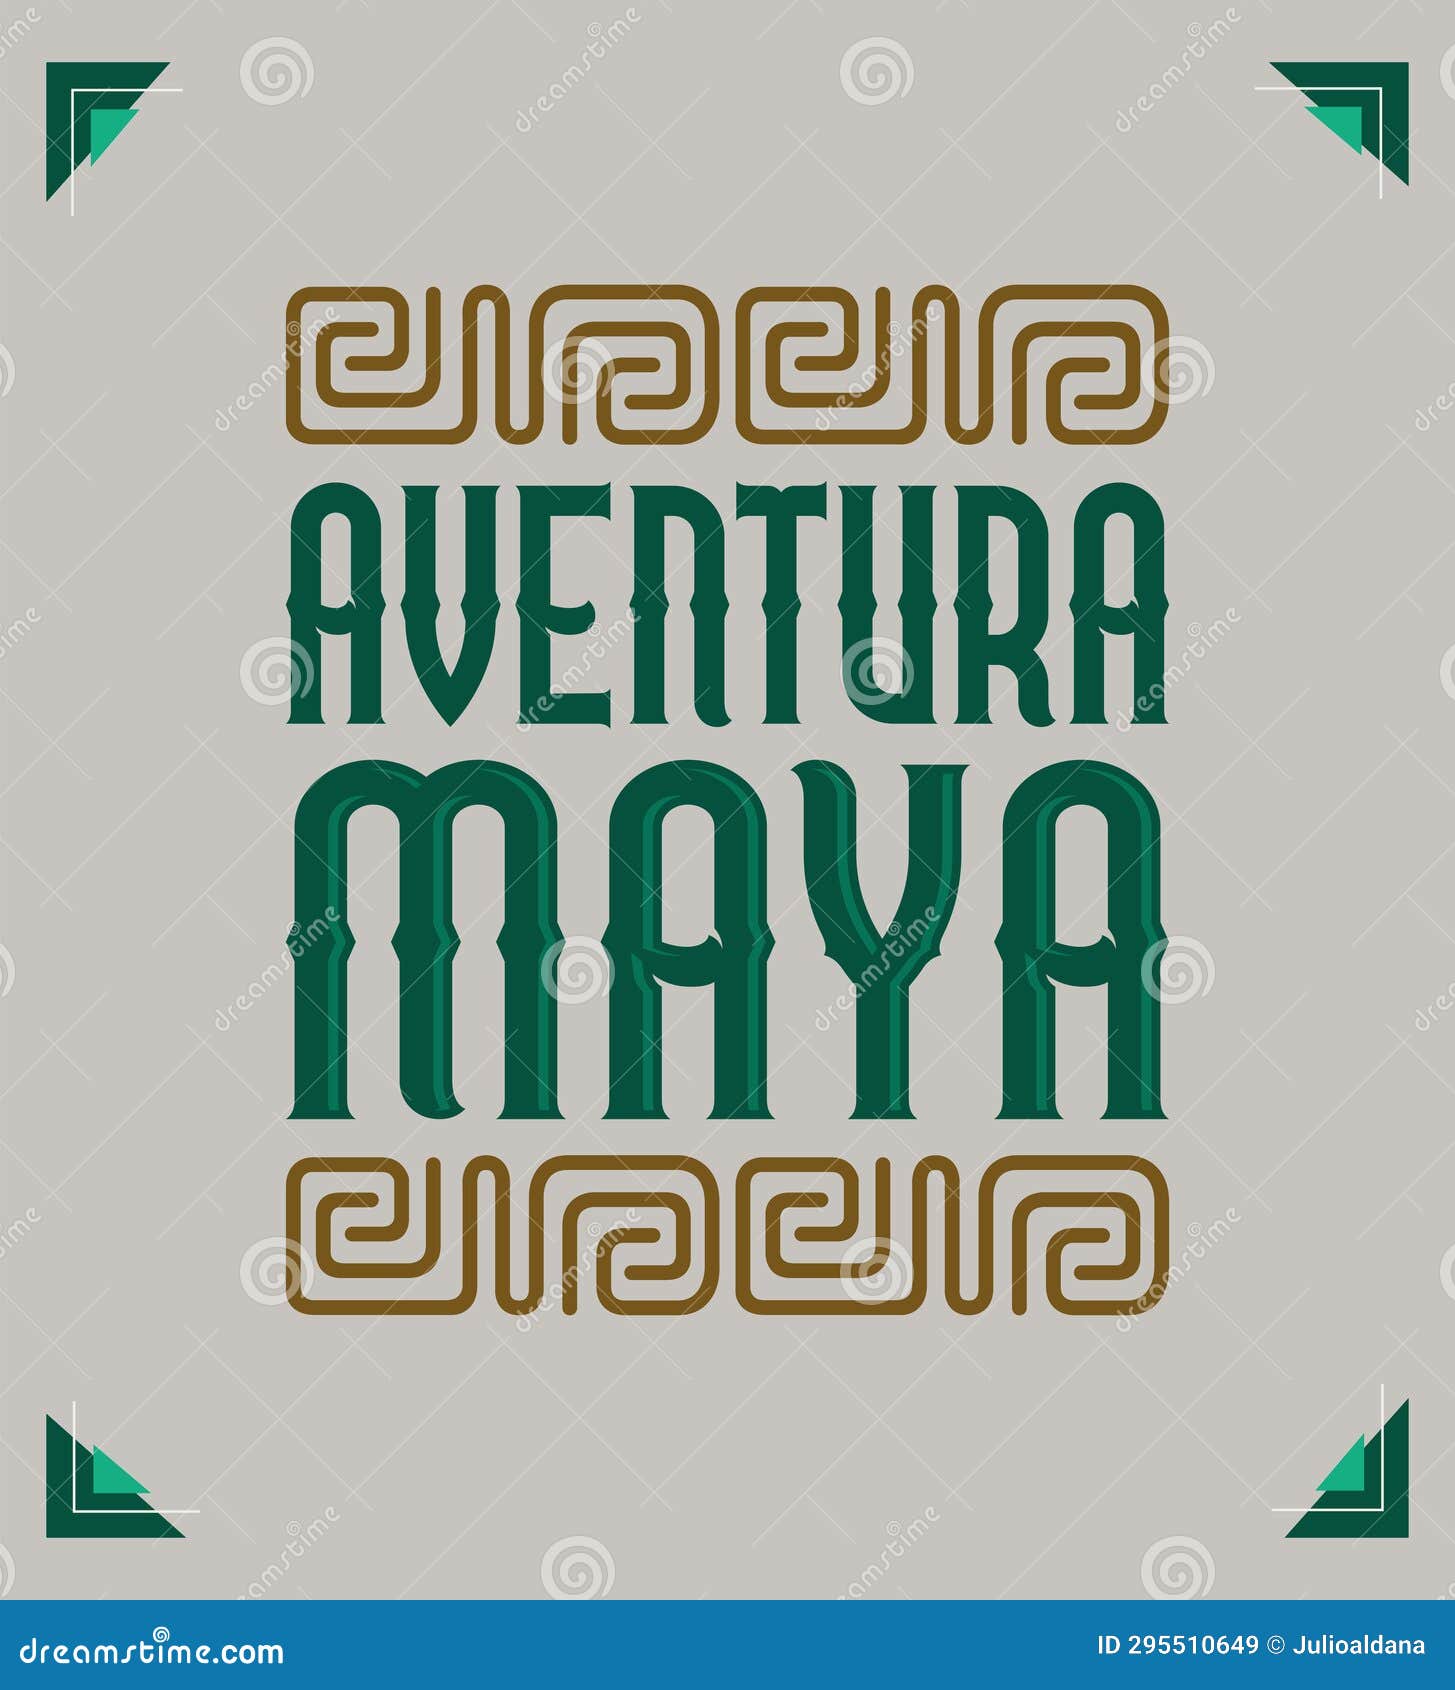 aventura maya, mayan adventure spanish text, sign tourism  mexico travel